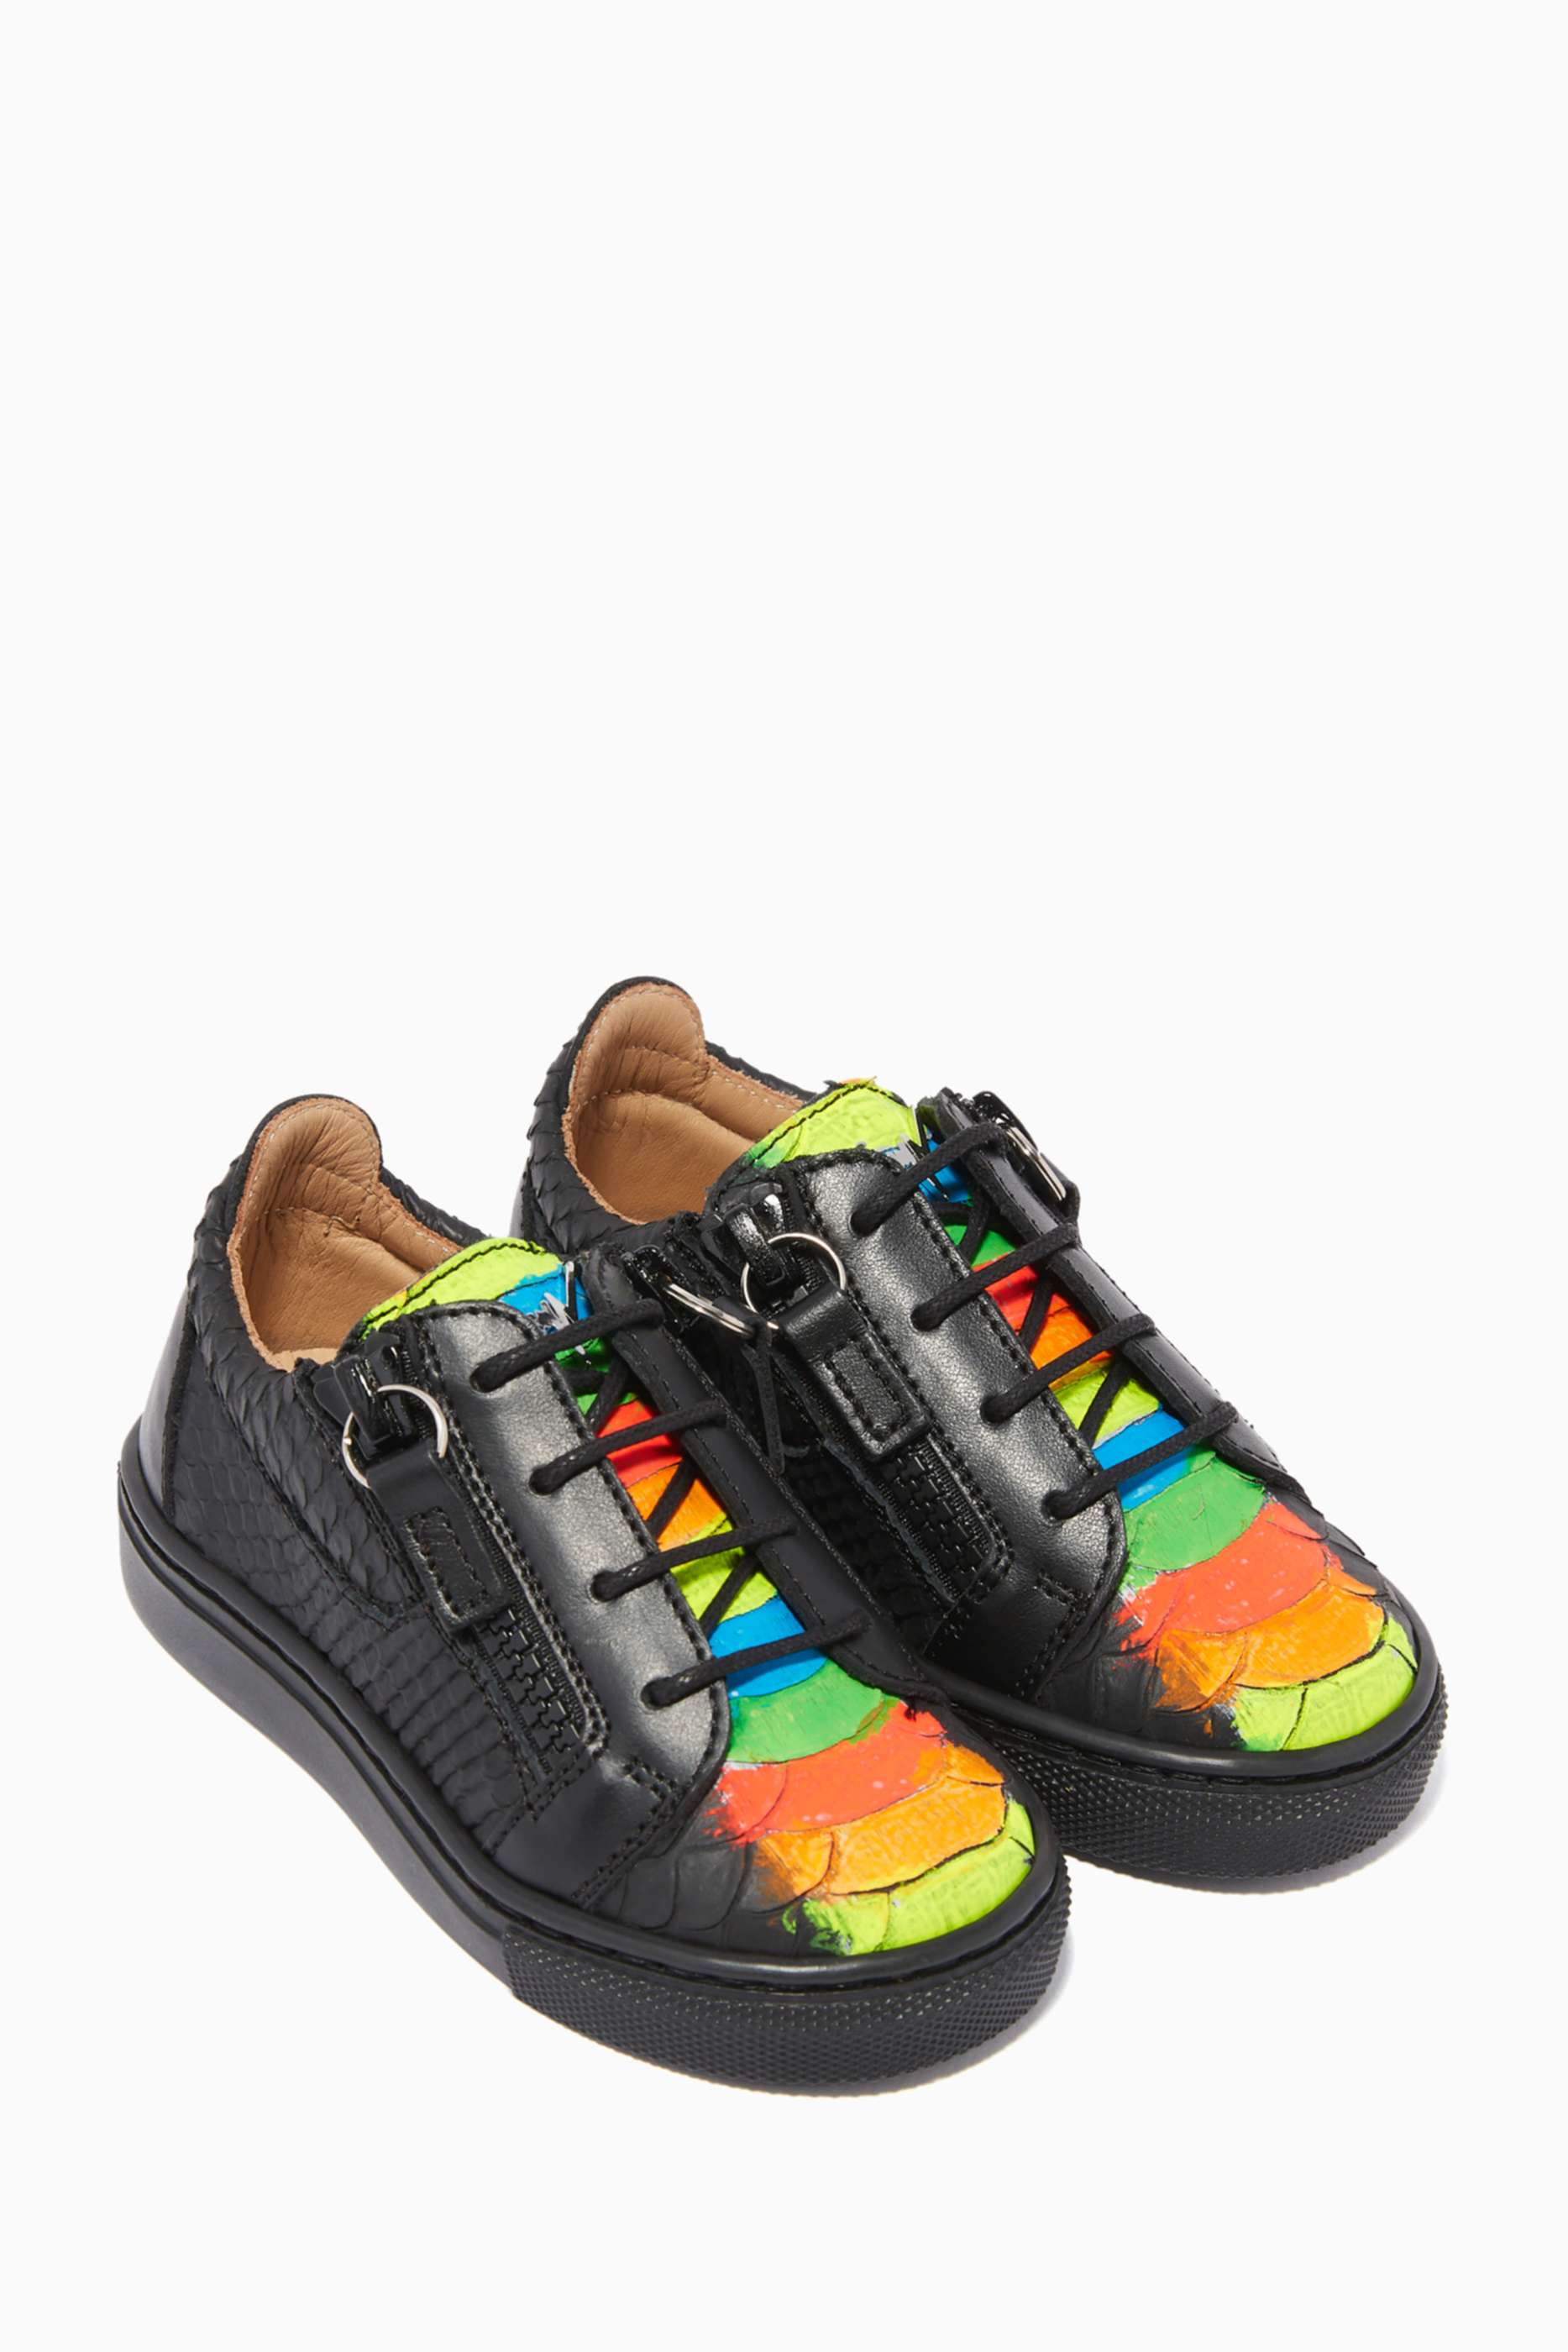 giuseppe zanotti rainbow sneakers